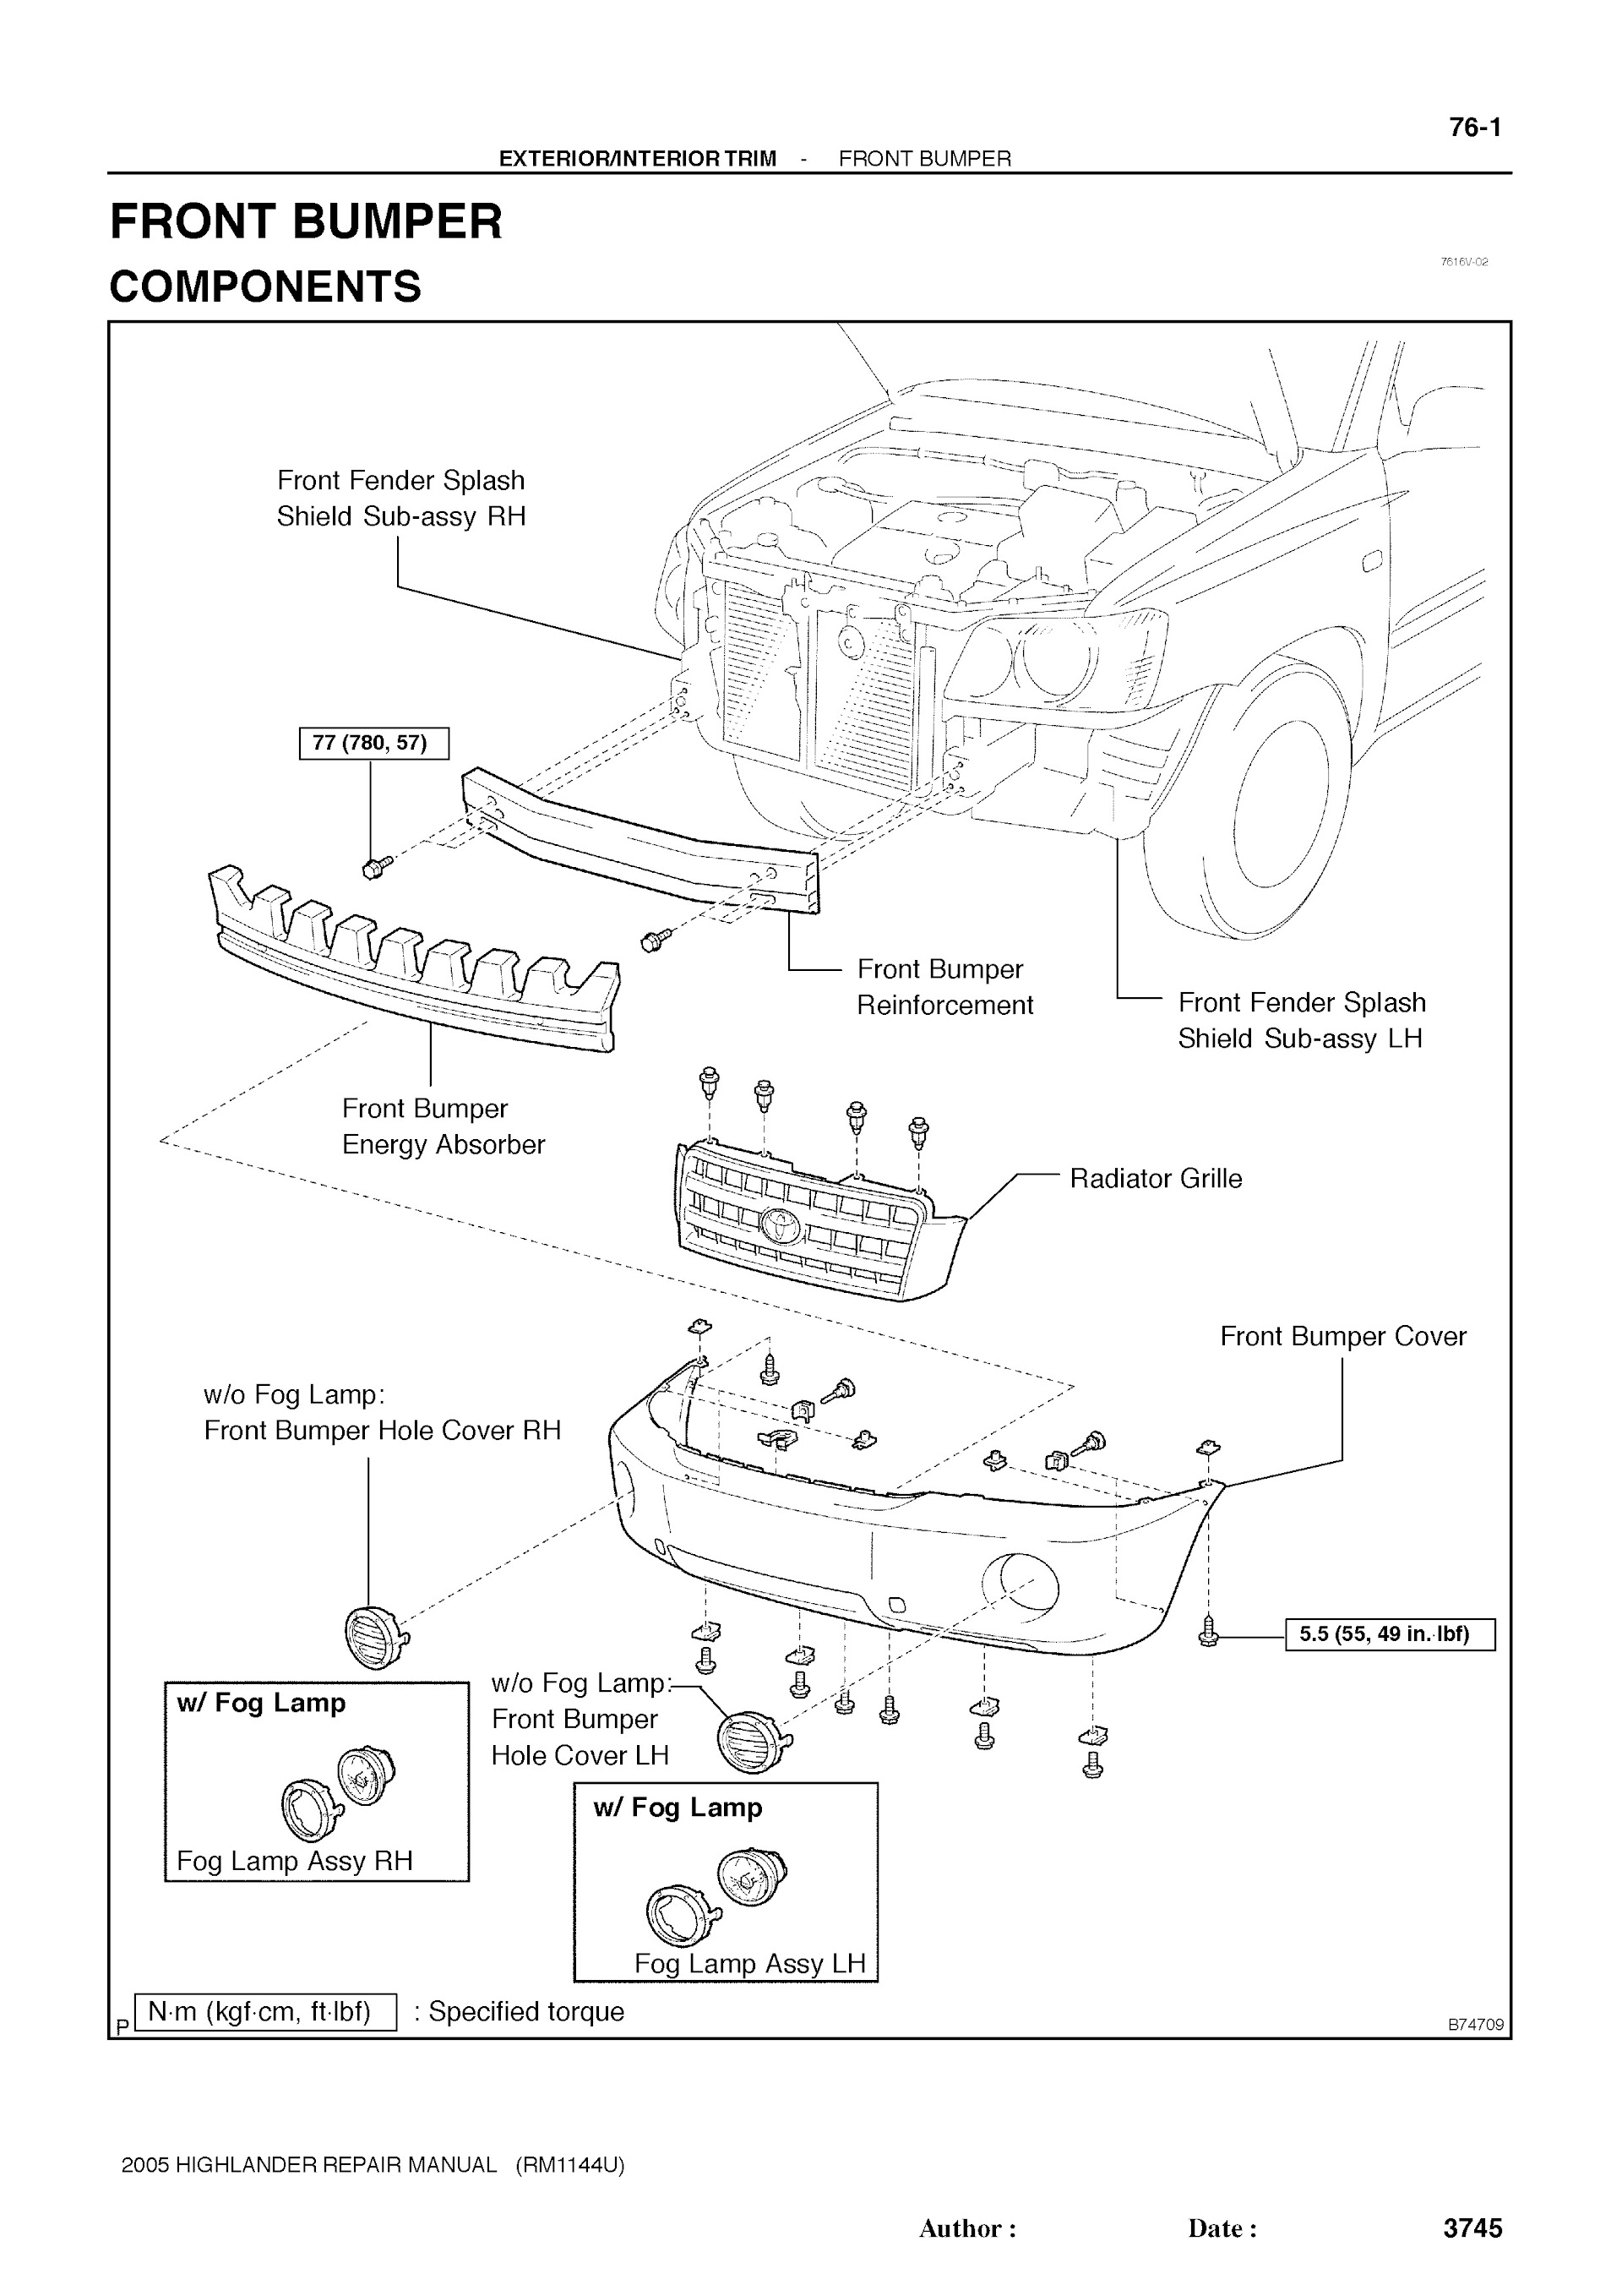 2001-2007 Toyota Highlander Repair Manual Front Bumper Replacement